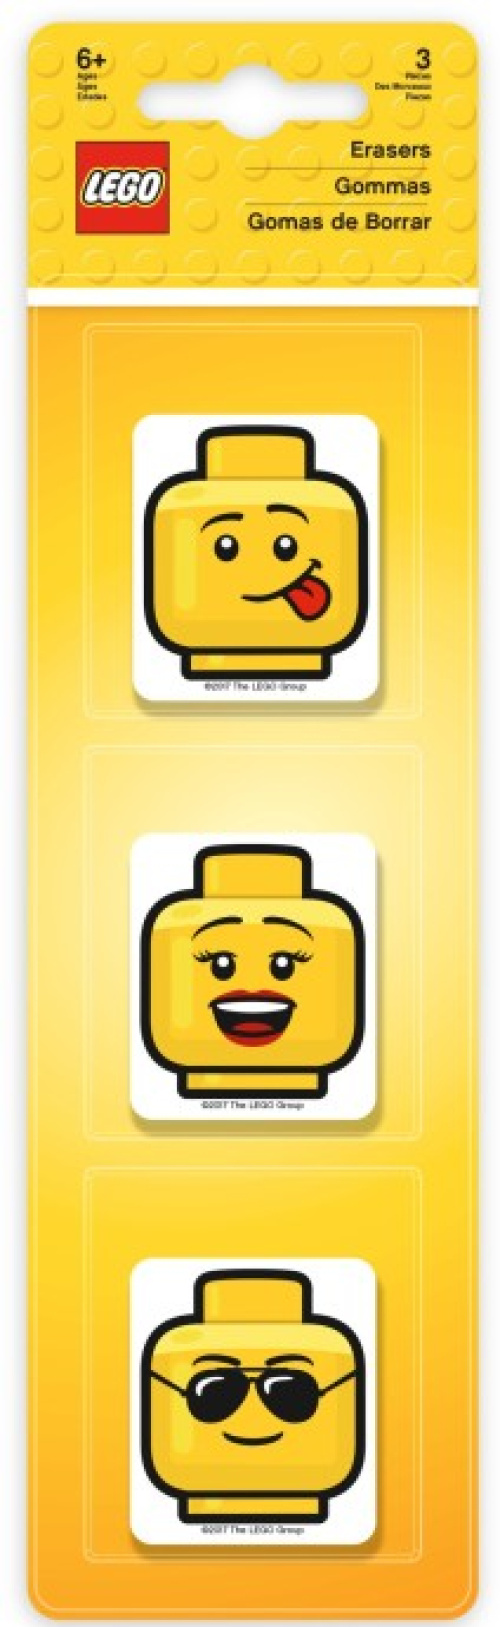 5005579-1 LEGO Erasers 3 Pack